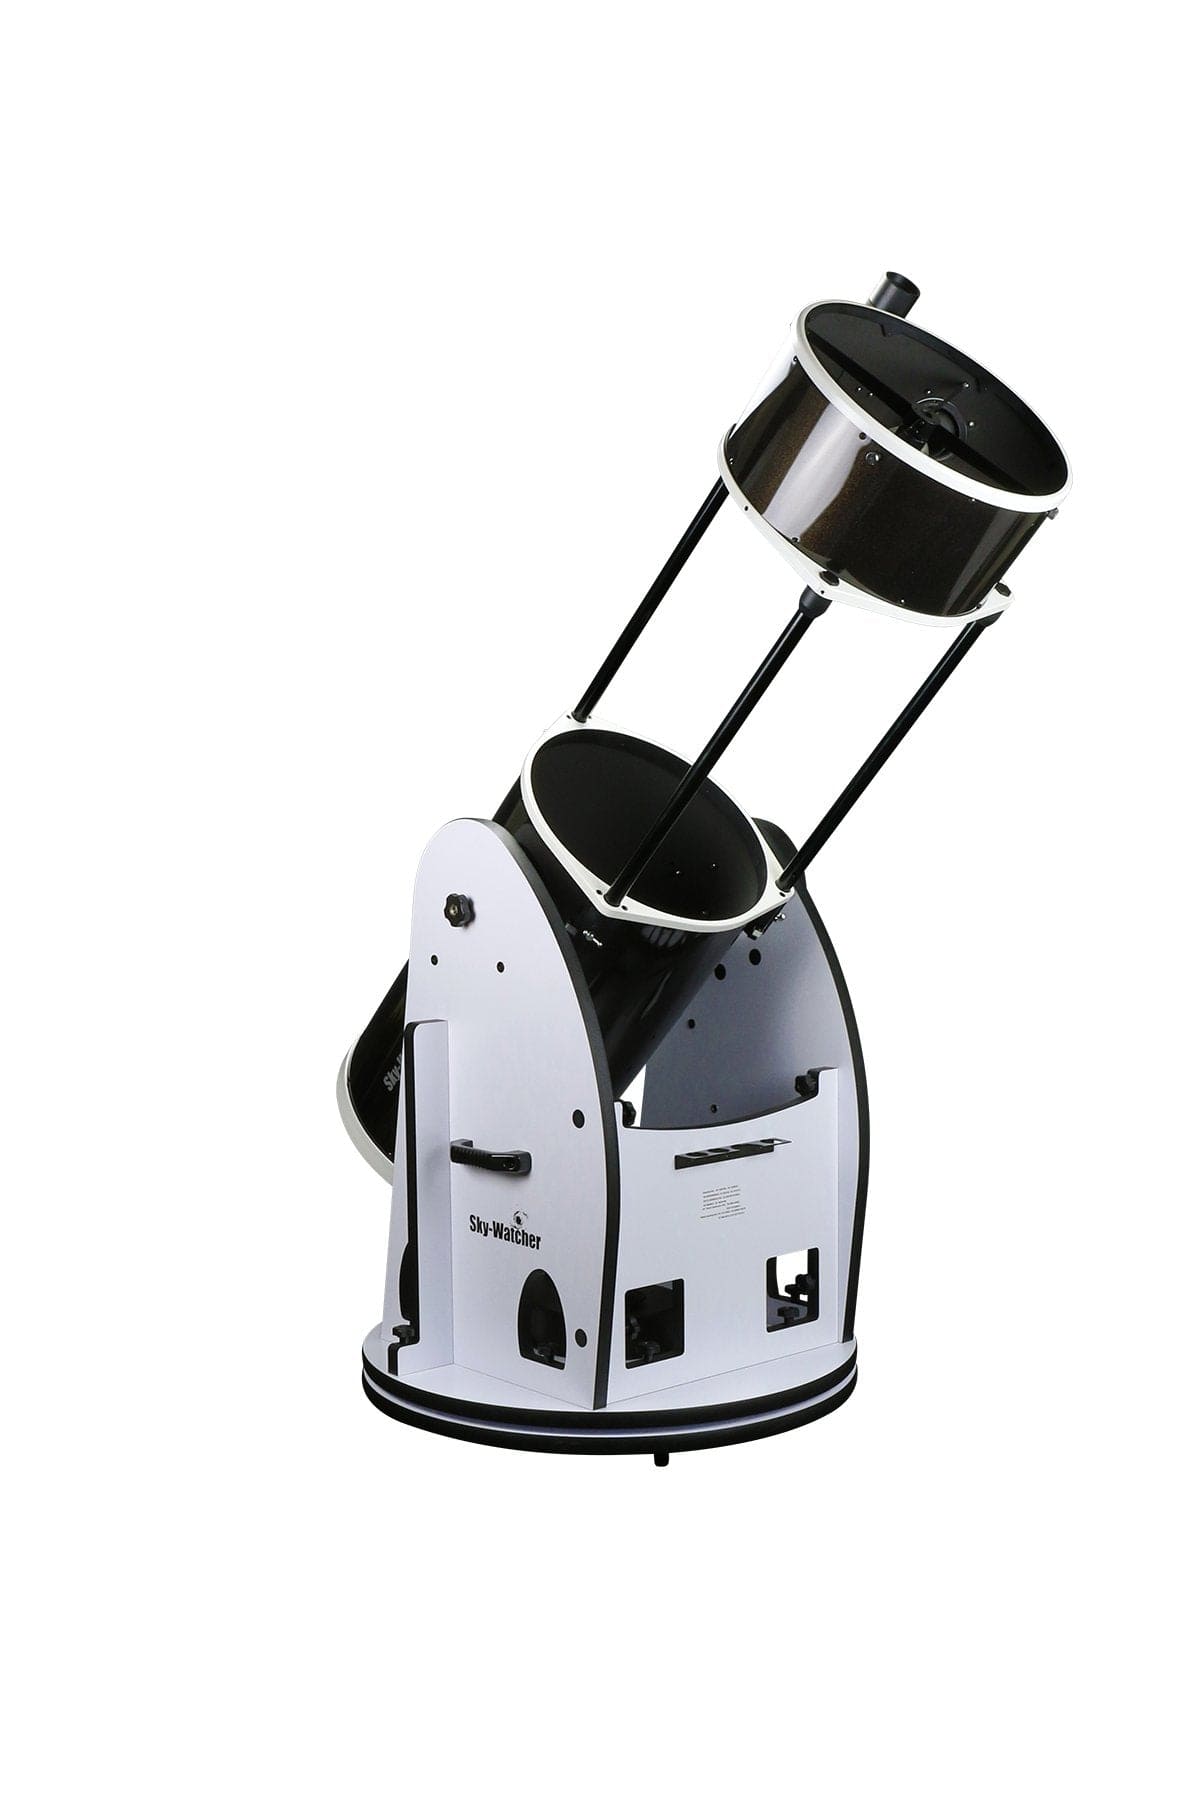 Sky-Watcher Telescope Sky-Watcher Flextube 350P 14" SynScan GoTo Collapsible Dobsonian